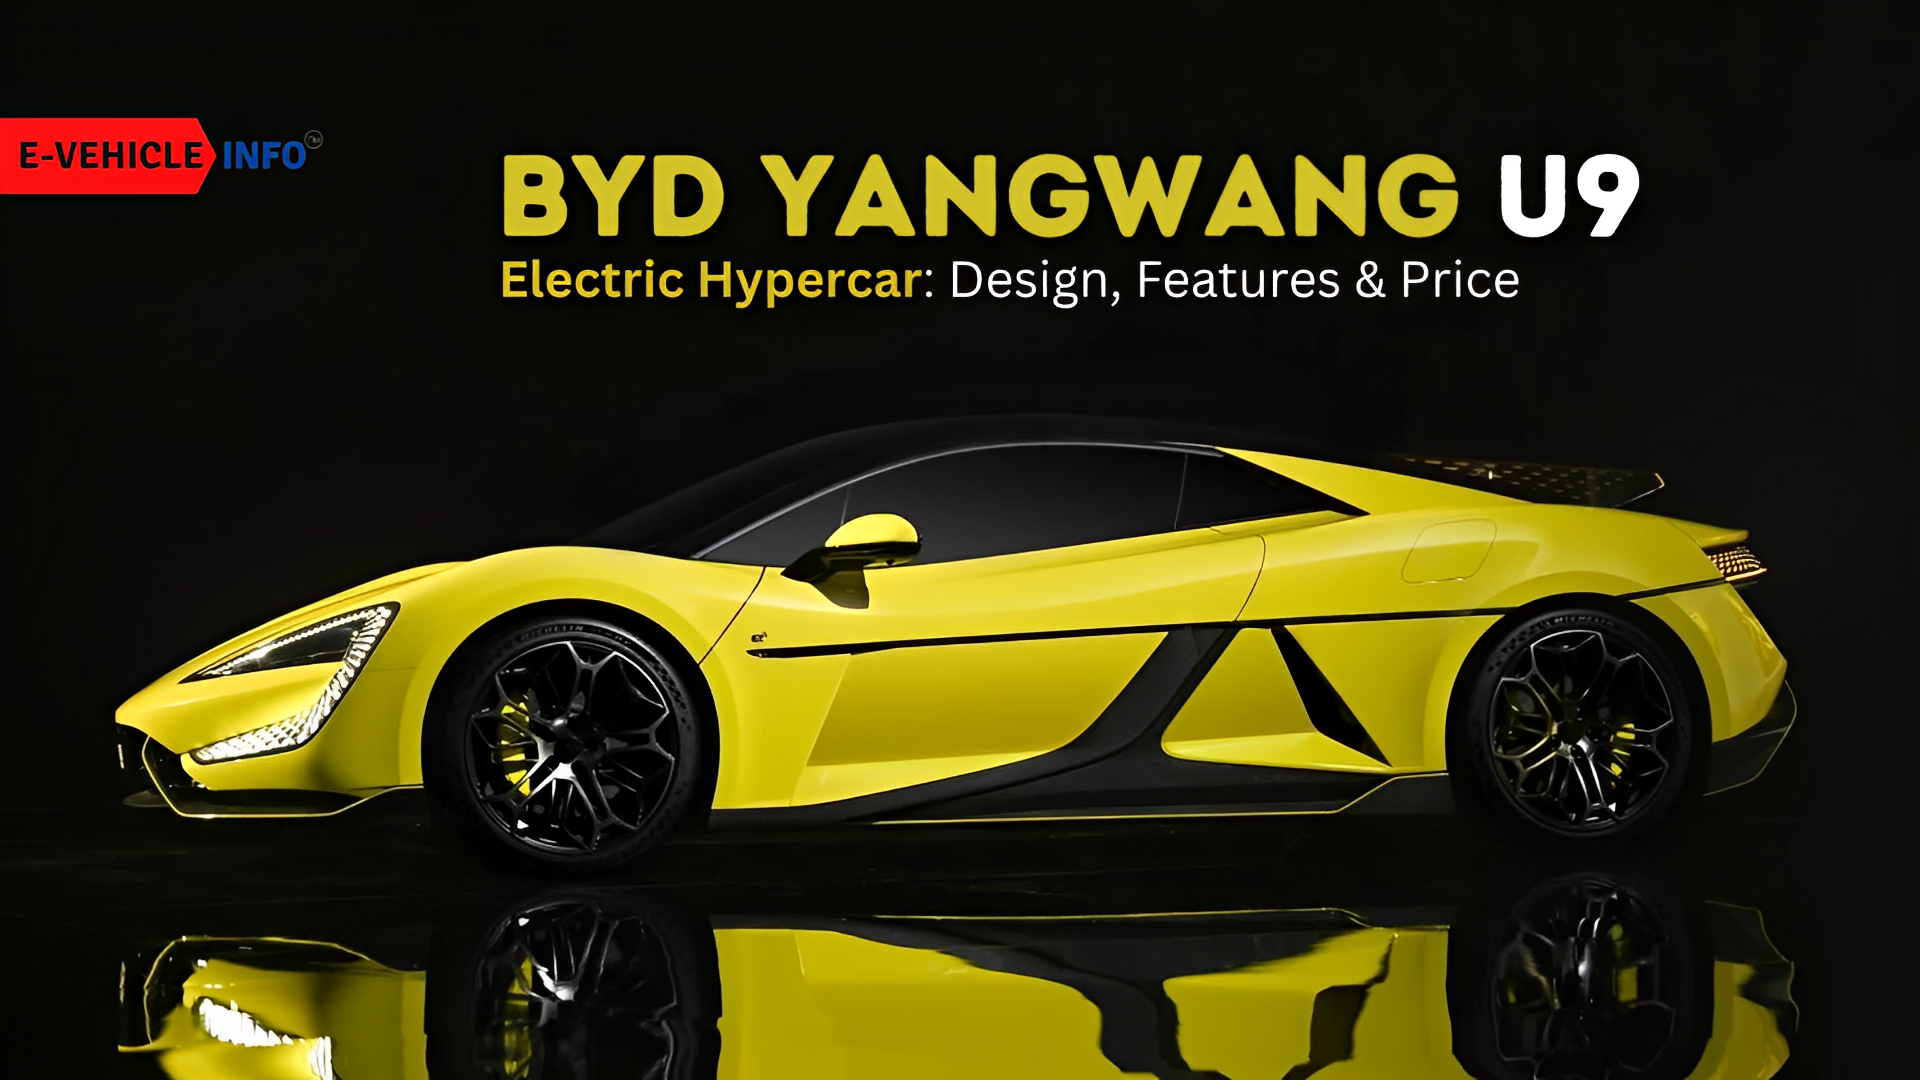 https://e-vehicleinfo.com/global/byd-yangwang-u9-electric-hypercar-design-features-price/